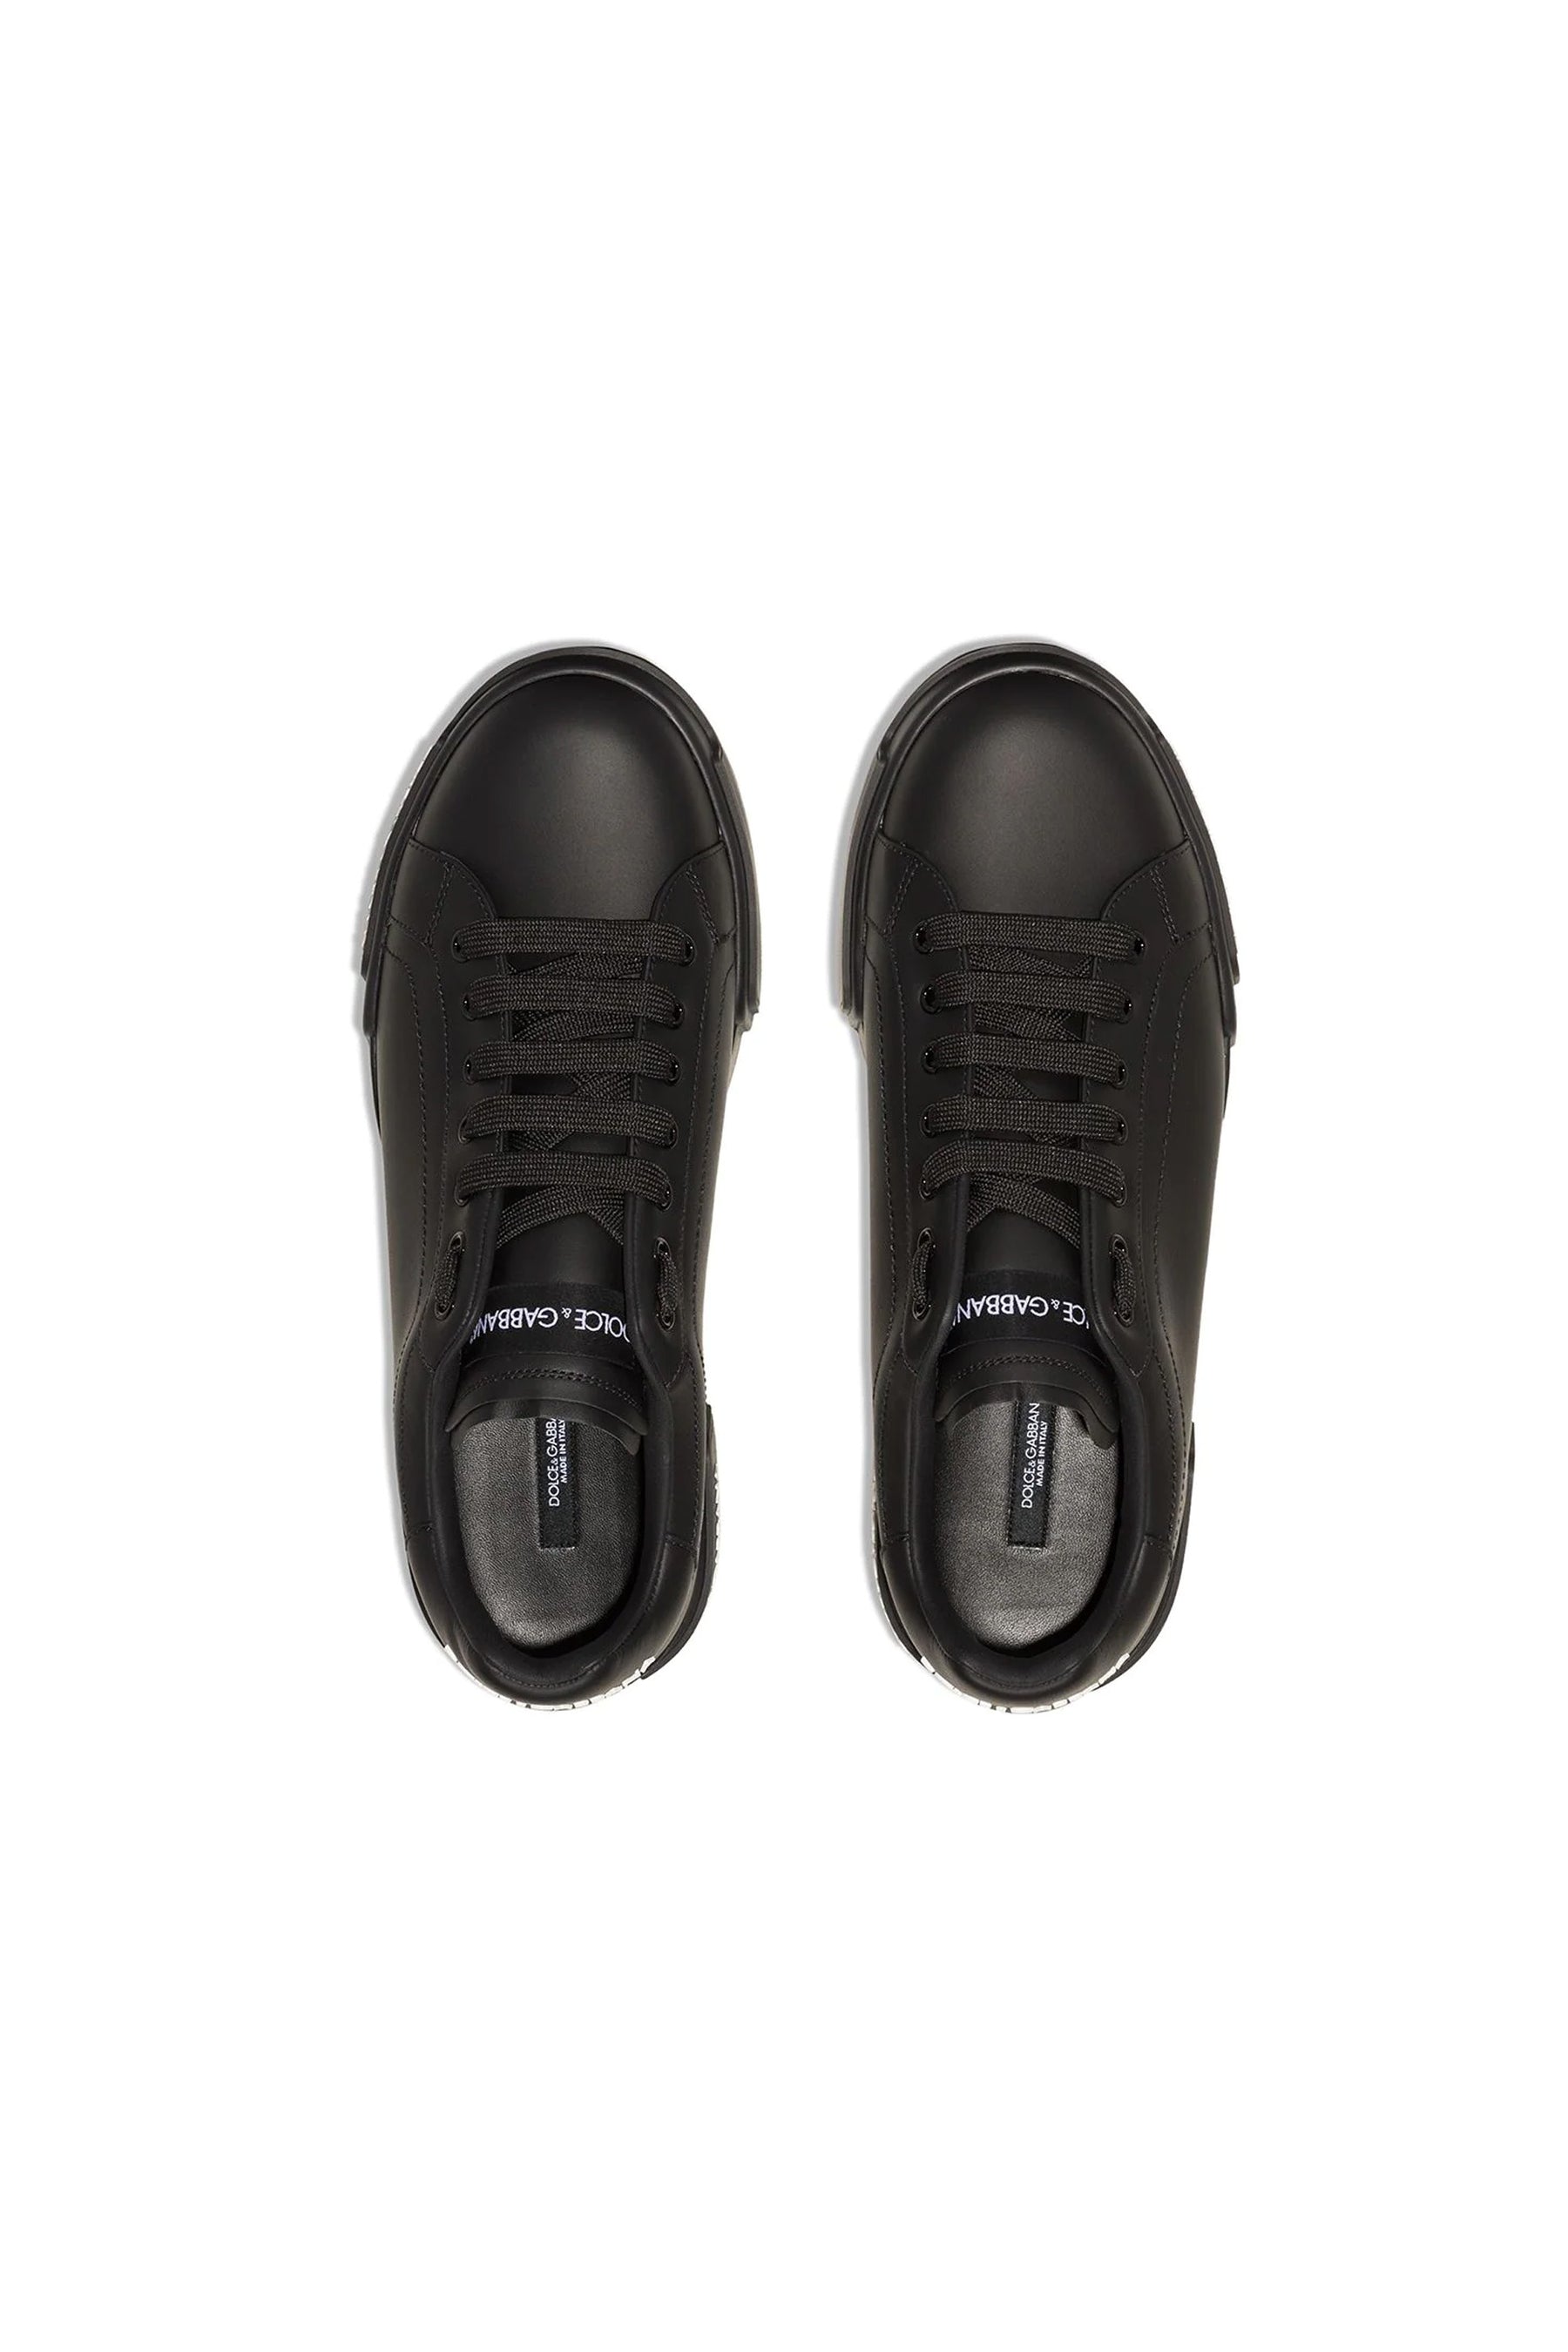 Dolce & Gabbana Portofino logo-detail sneakers black